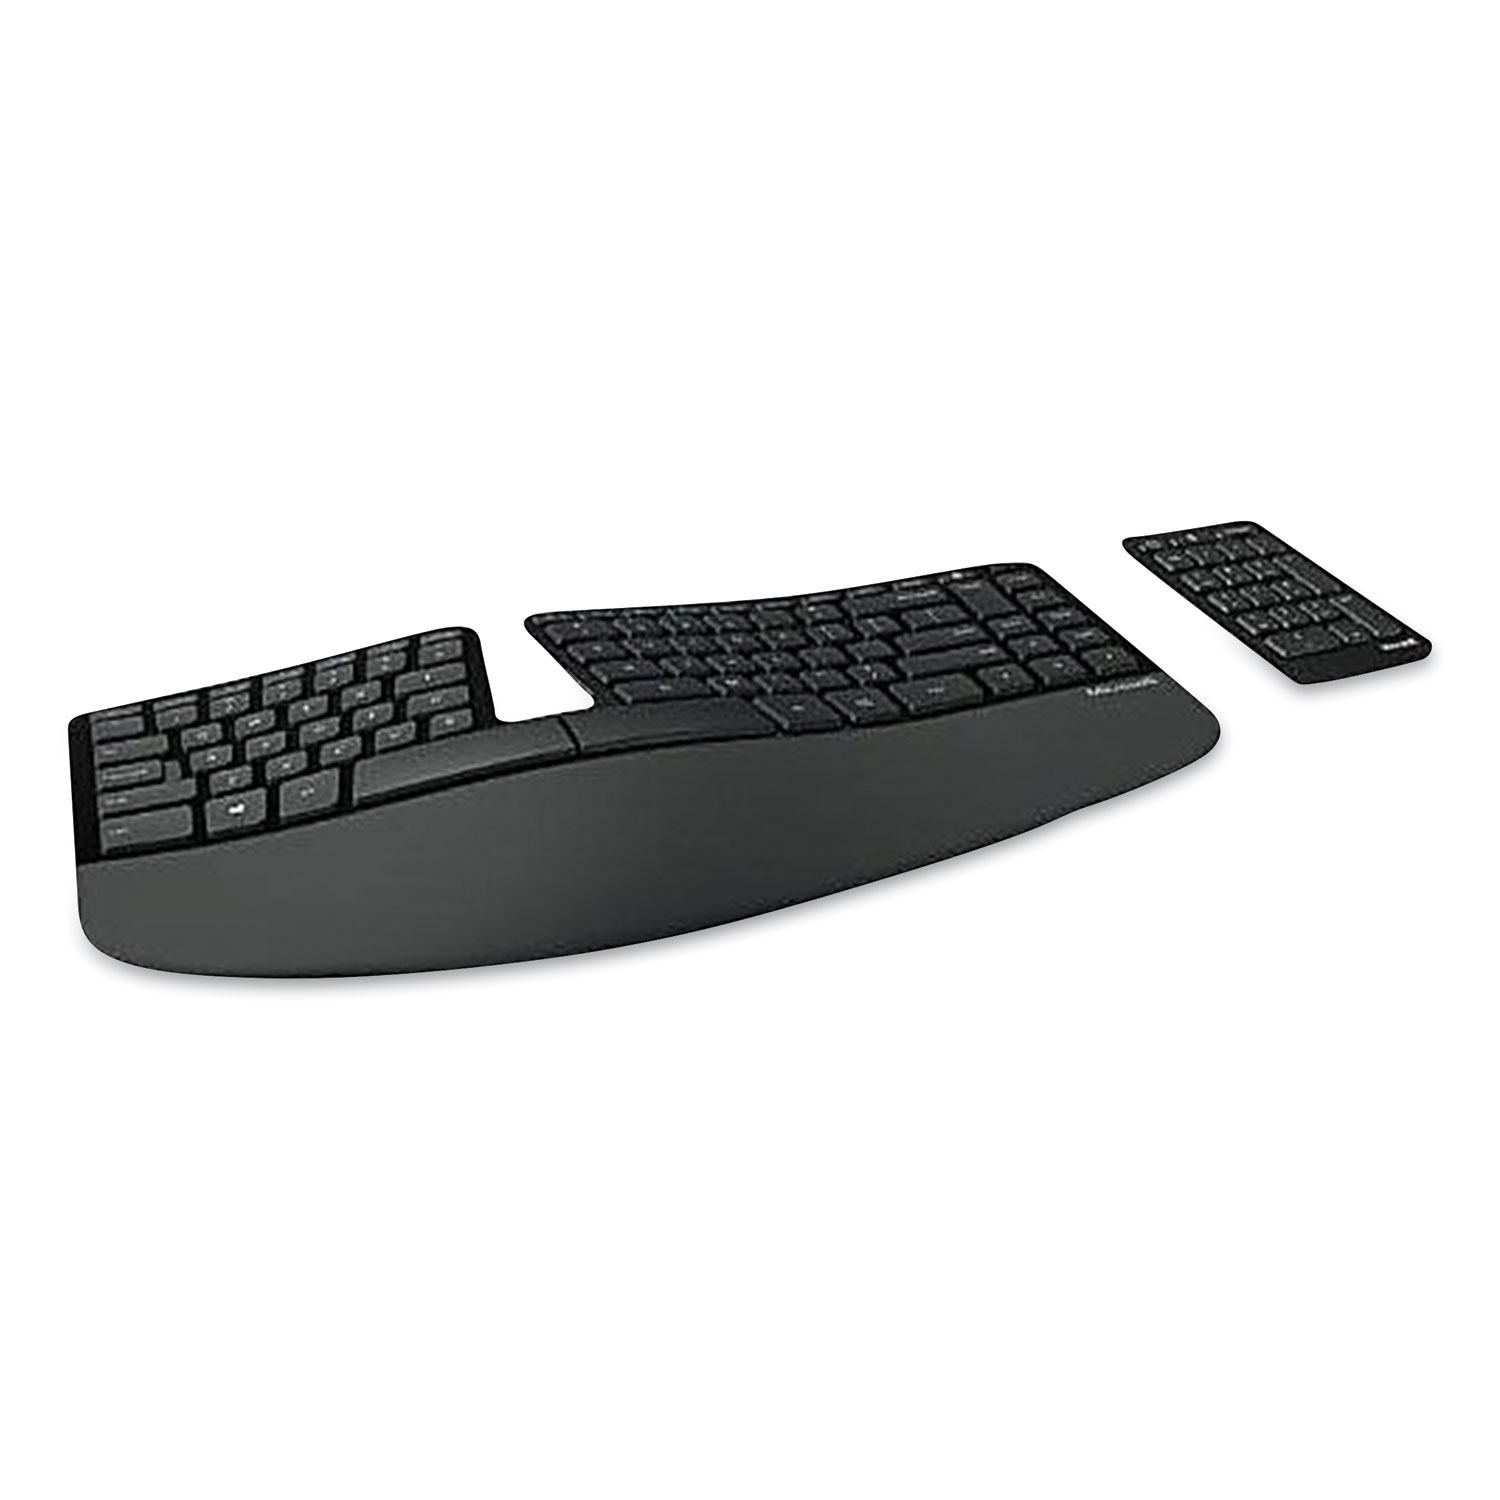 Microsoft® Sculpt Ergonomic Wireless Keyboard, 104 Keys, Black